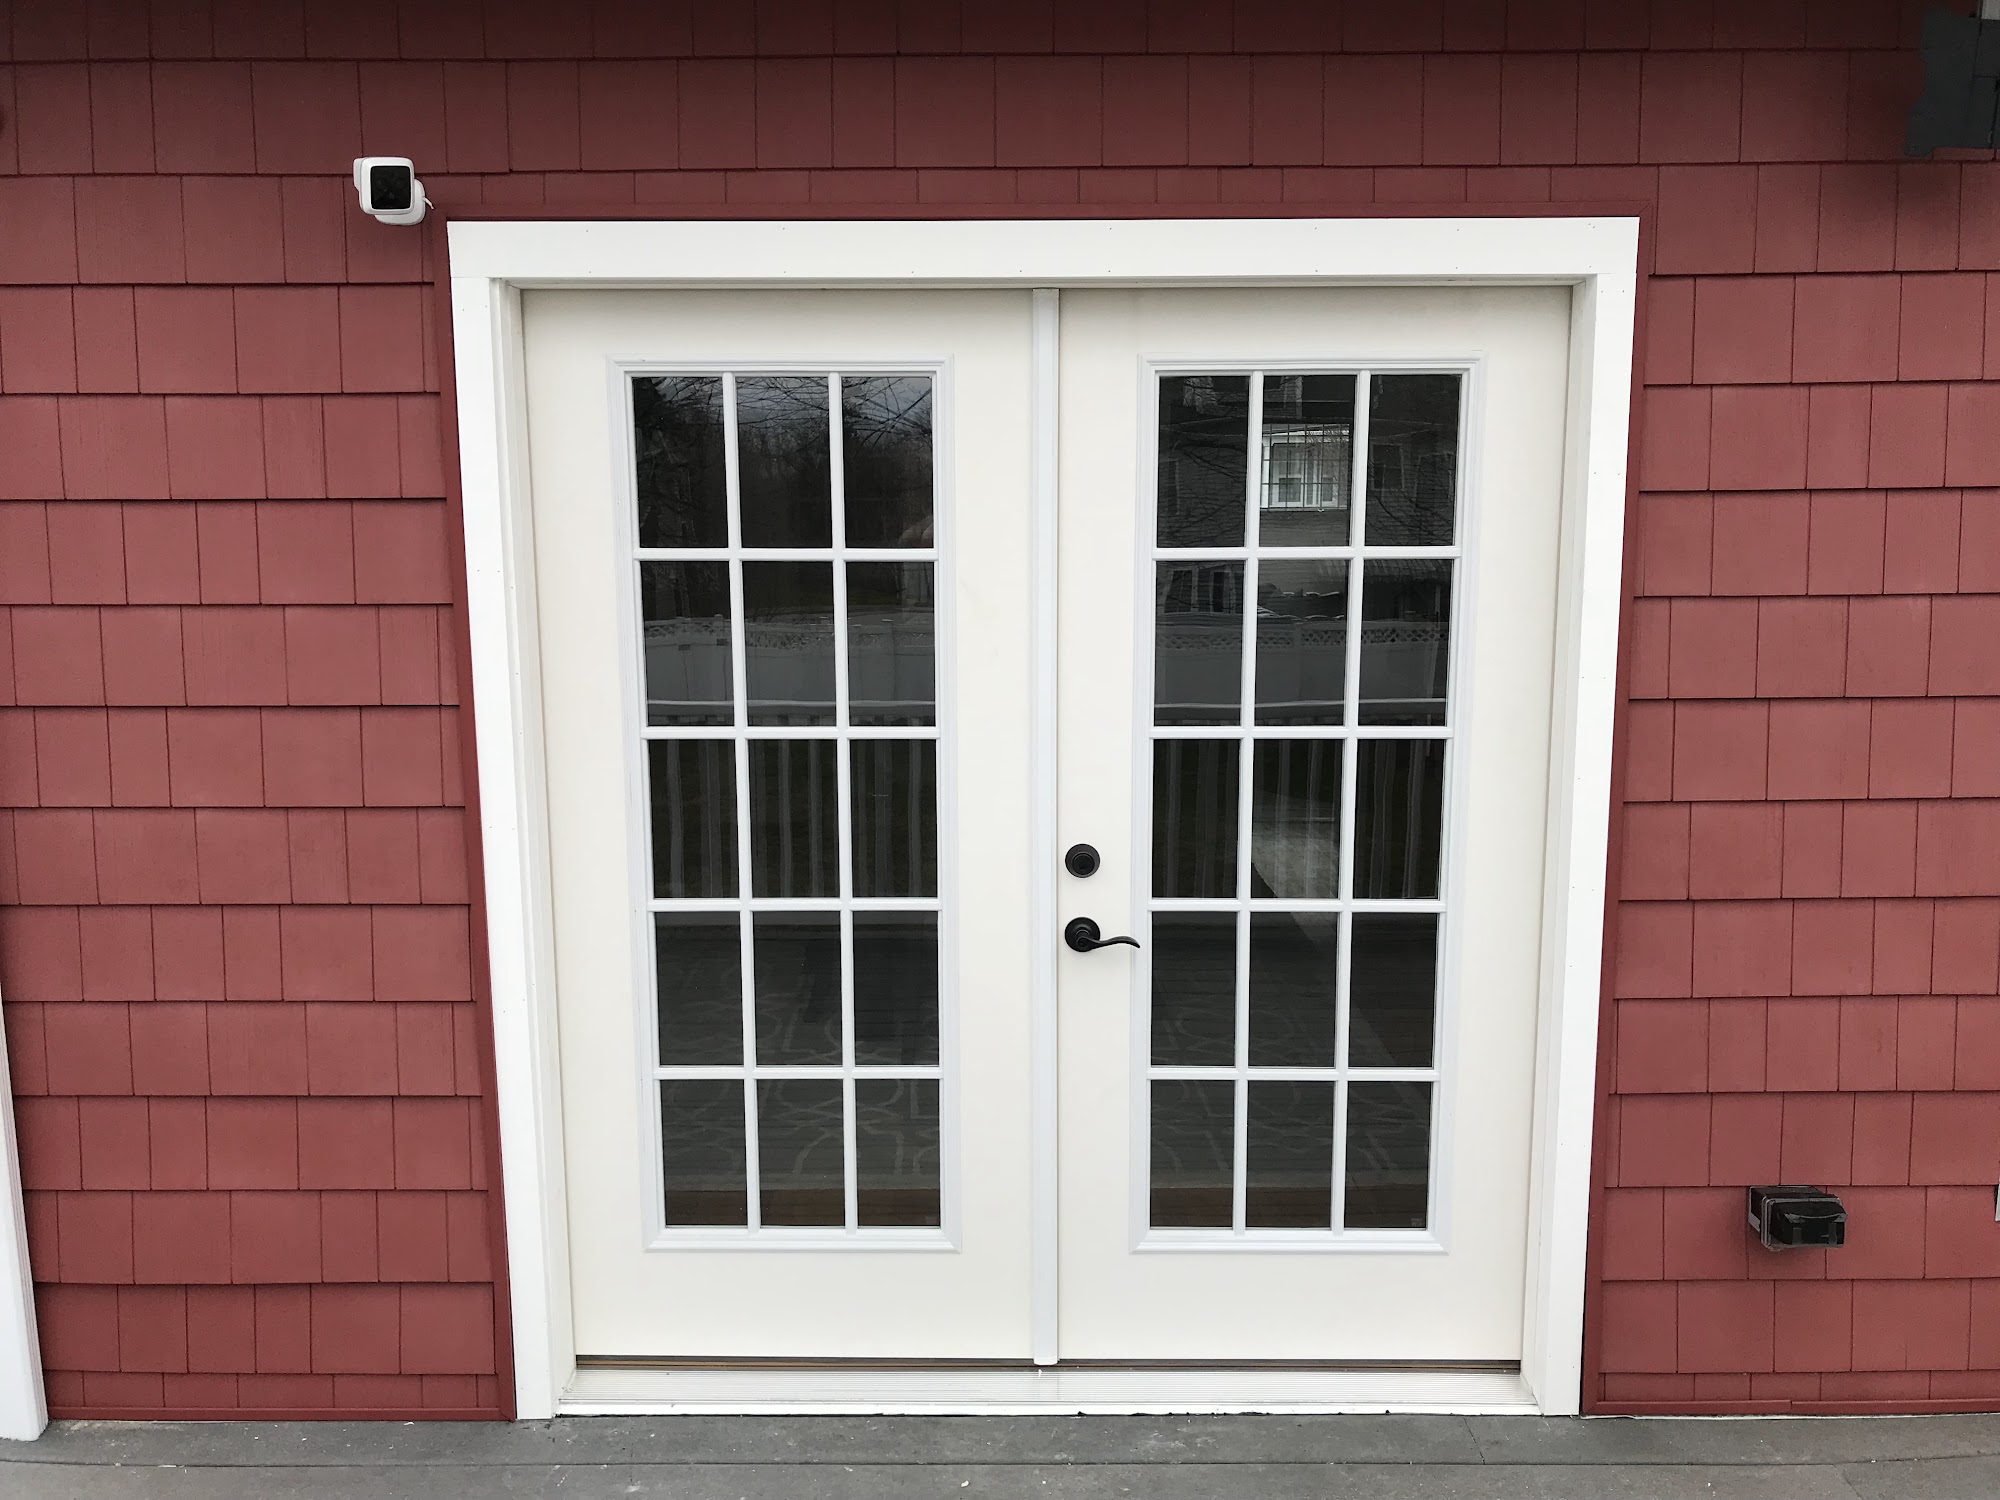 Steve Hoggard Door & Window 54 Central St, Newbury Massachusetts 01922